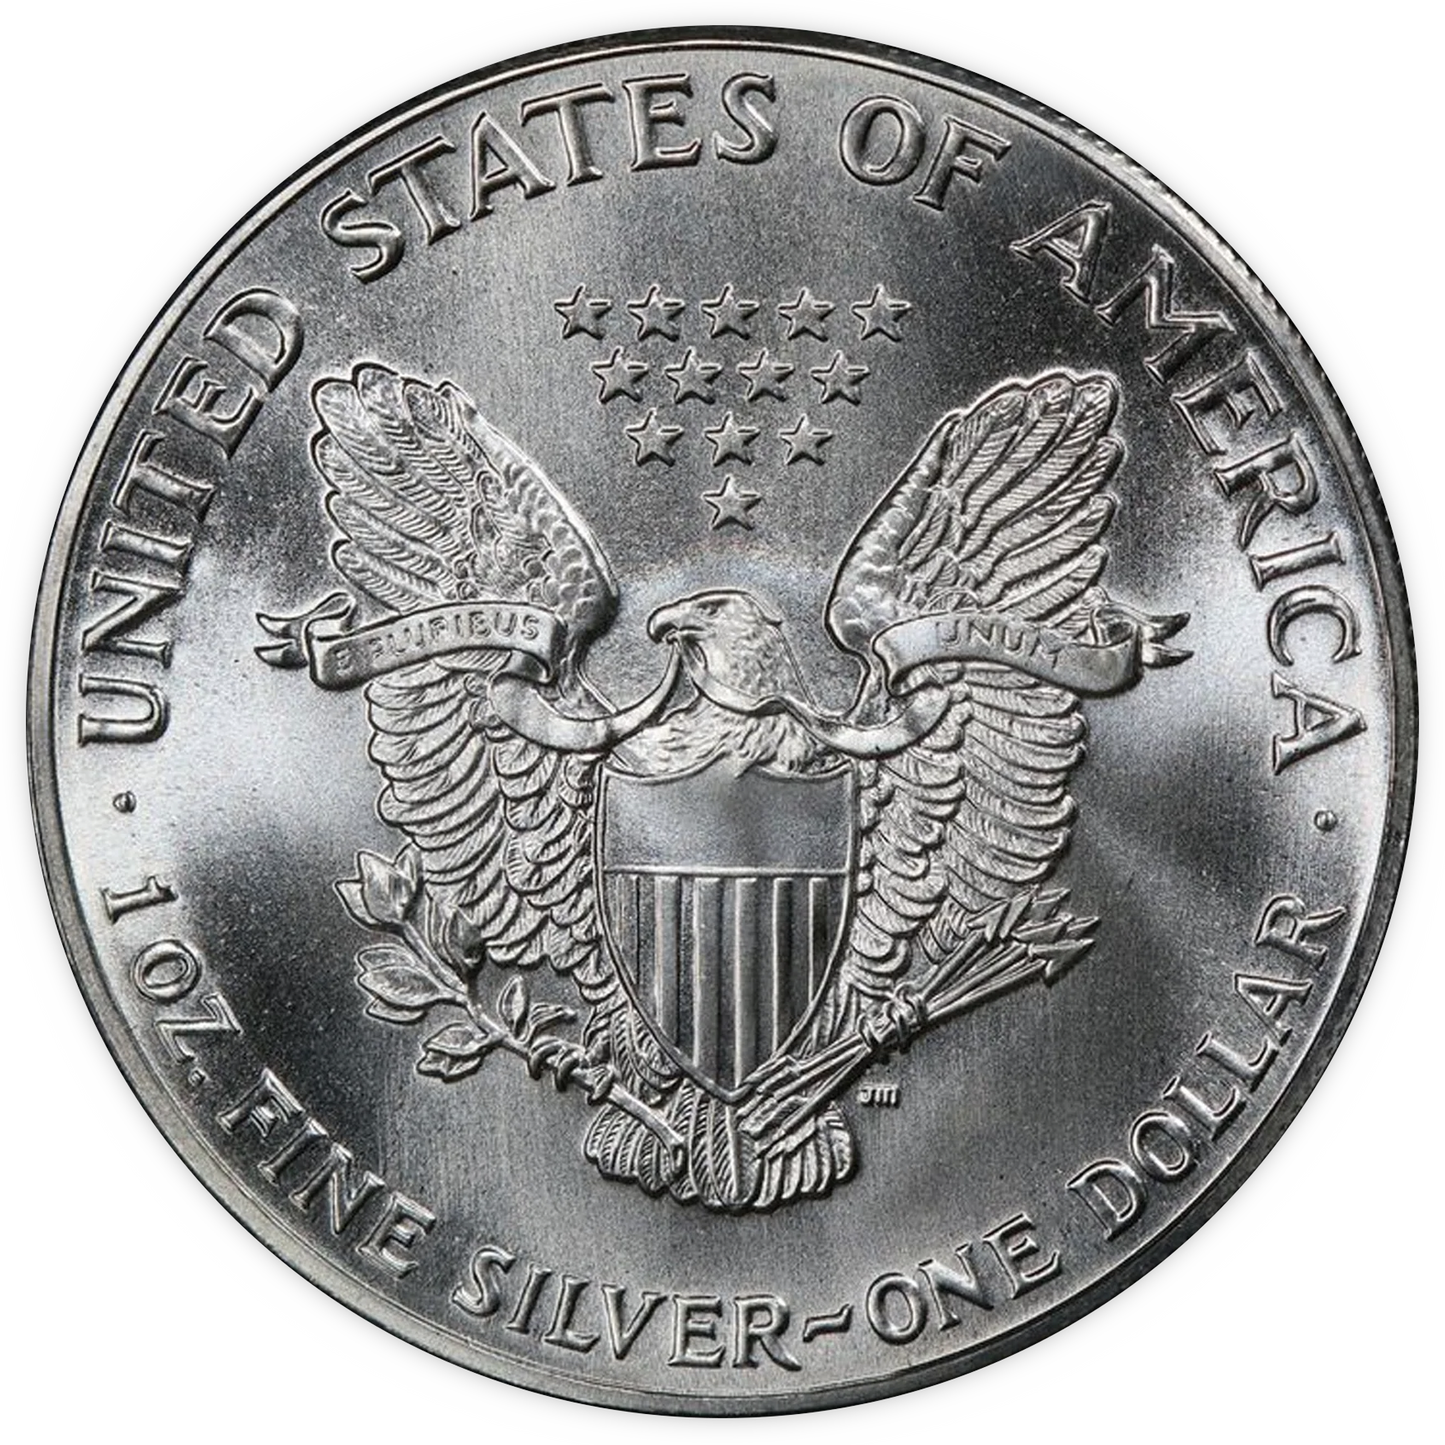 1986 USA Flag Silver Eagle - Limited Edition